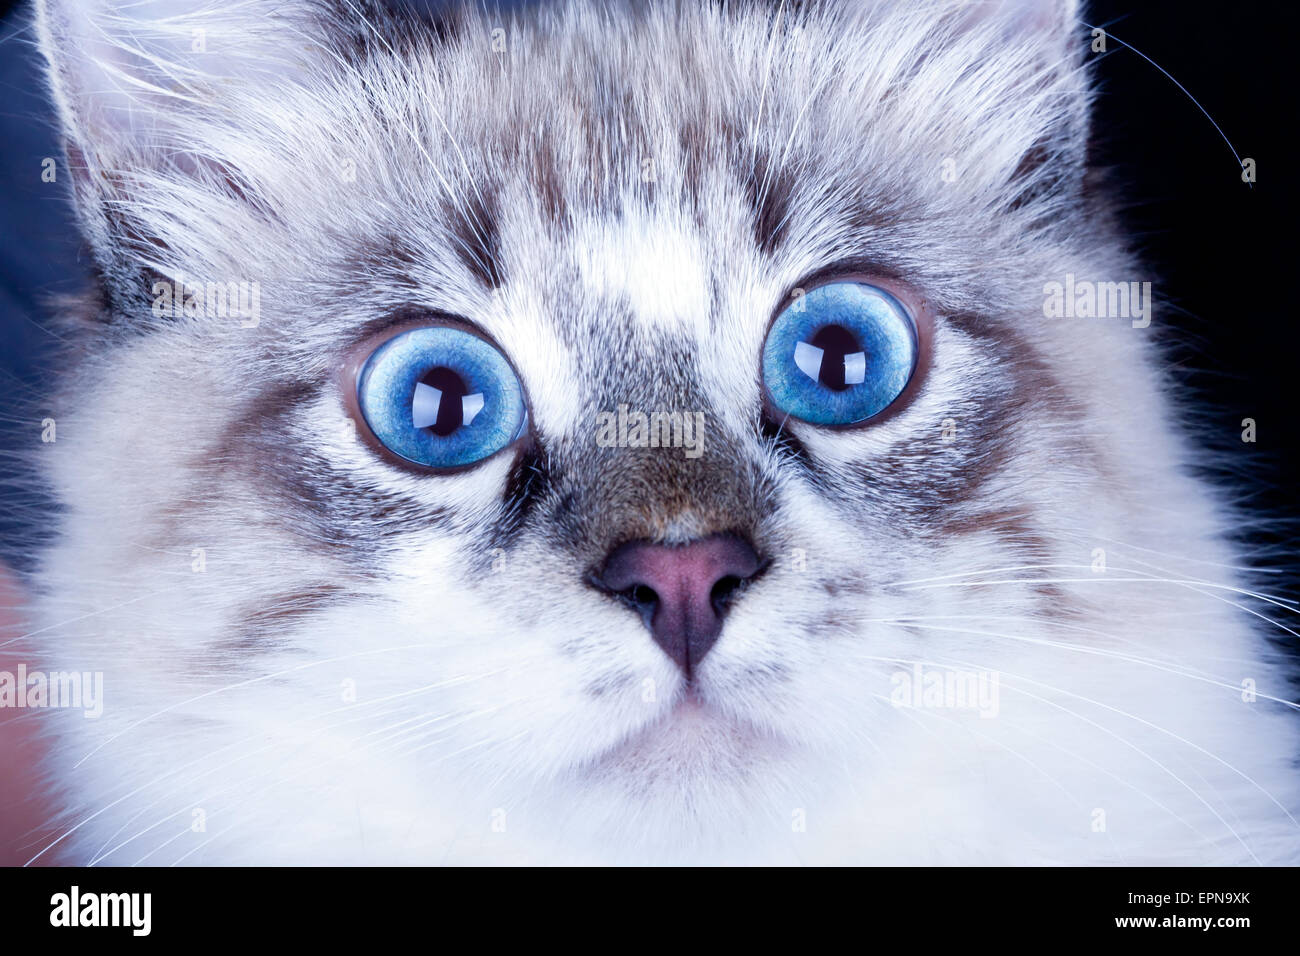 verängstigte junge blauäugige Katze hautnah. Neva Masquerade Katze Stockfoto